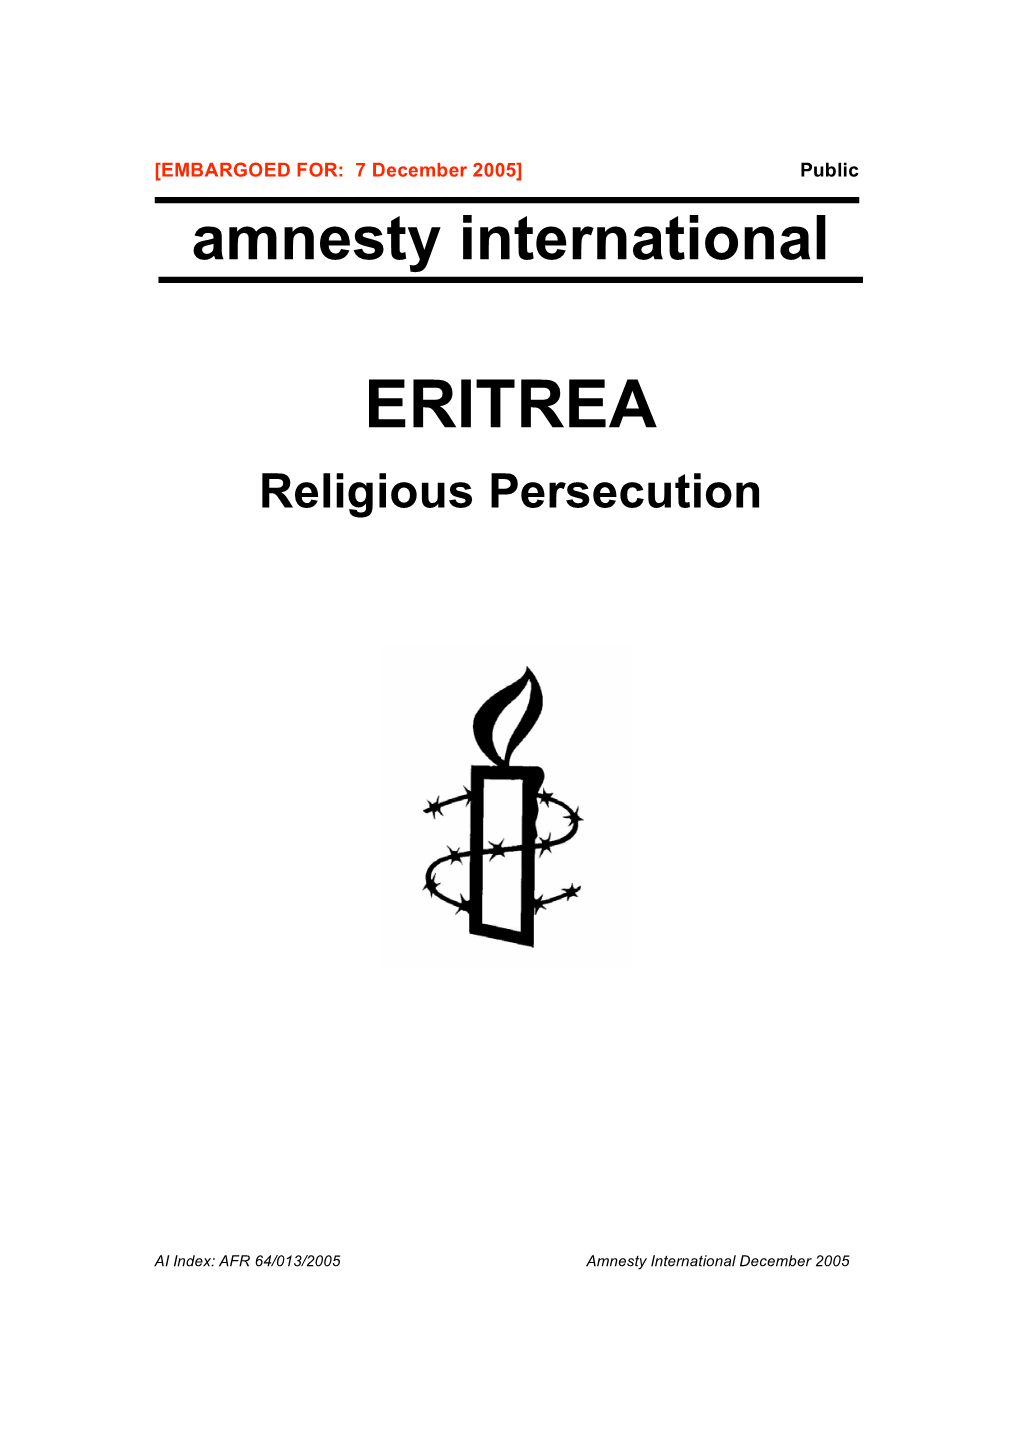 ERITREA Religious Persecution